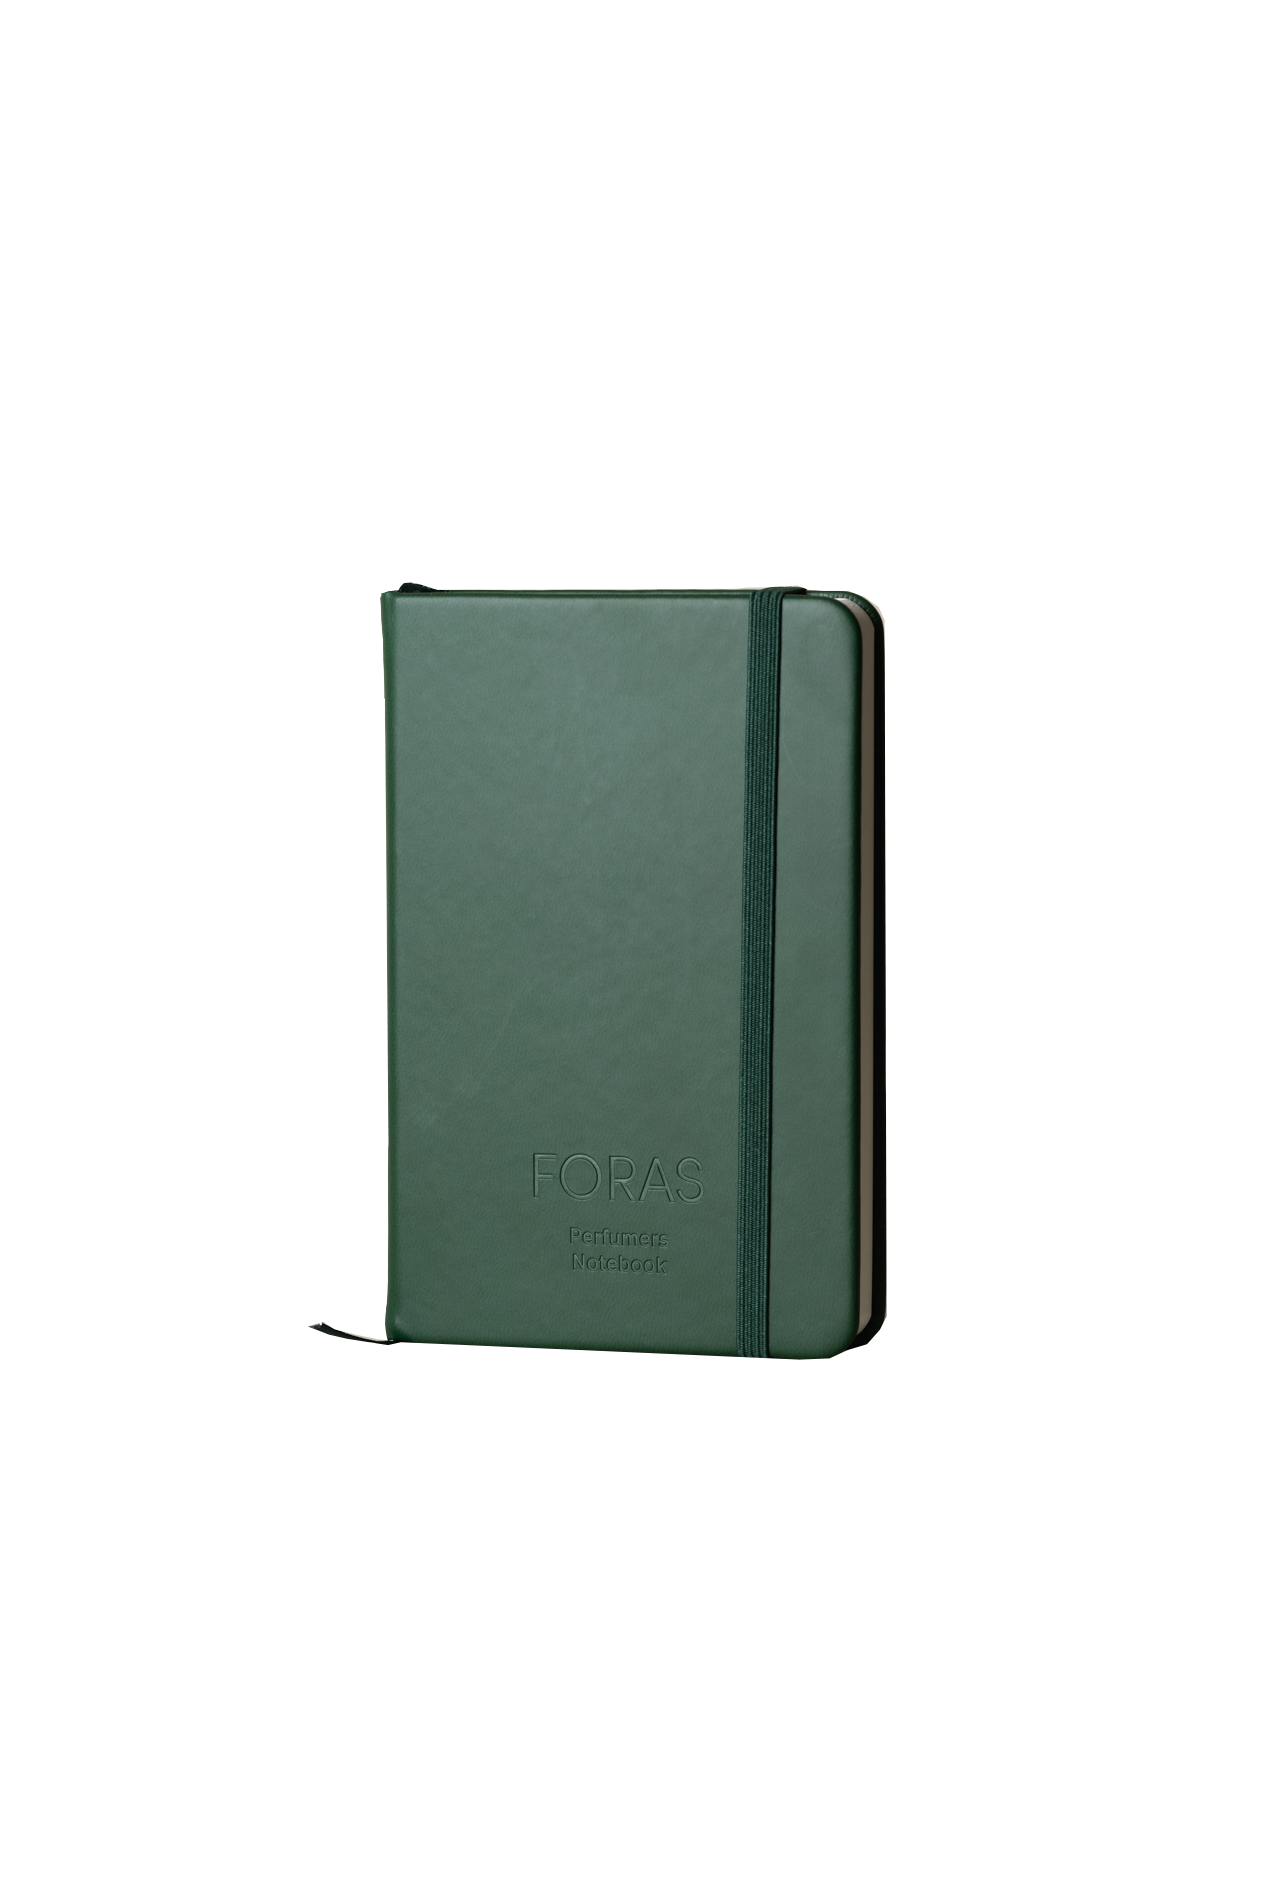 Foras Perfumer's Notebook